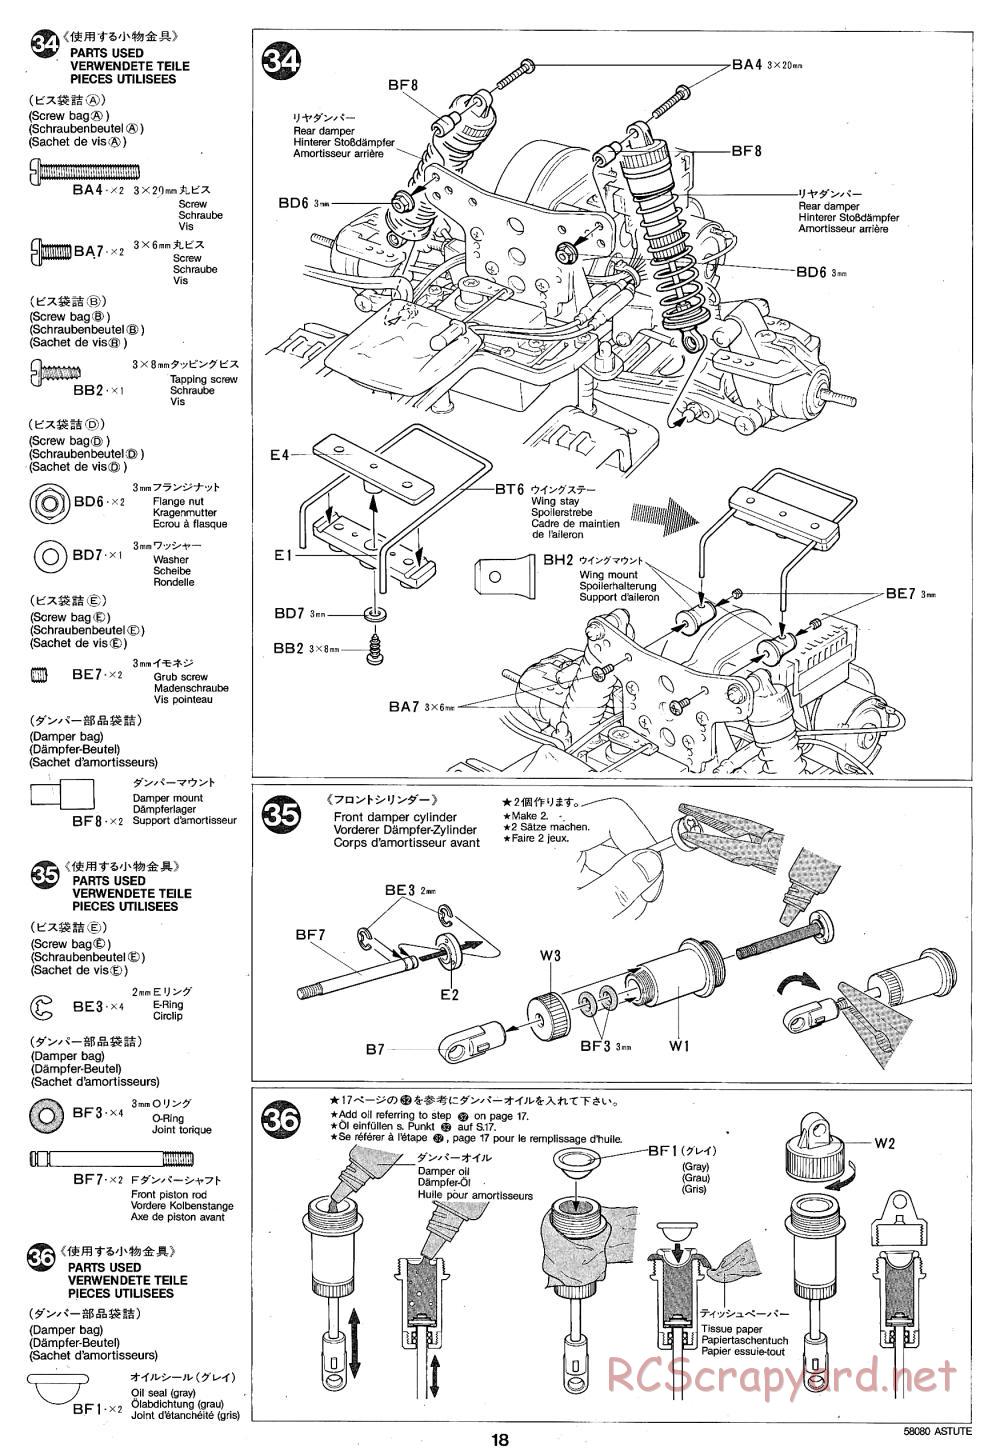 Tamiya - Astute - 58080 - Manual - Page 18